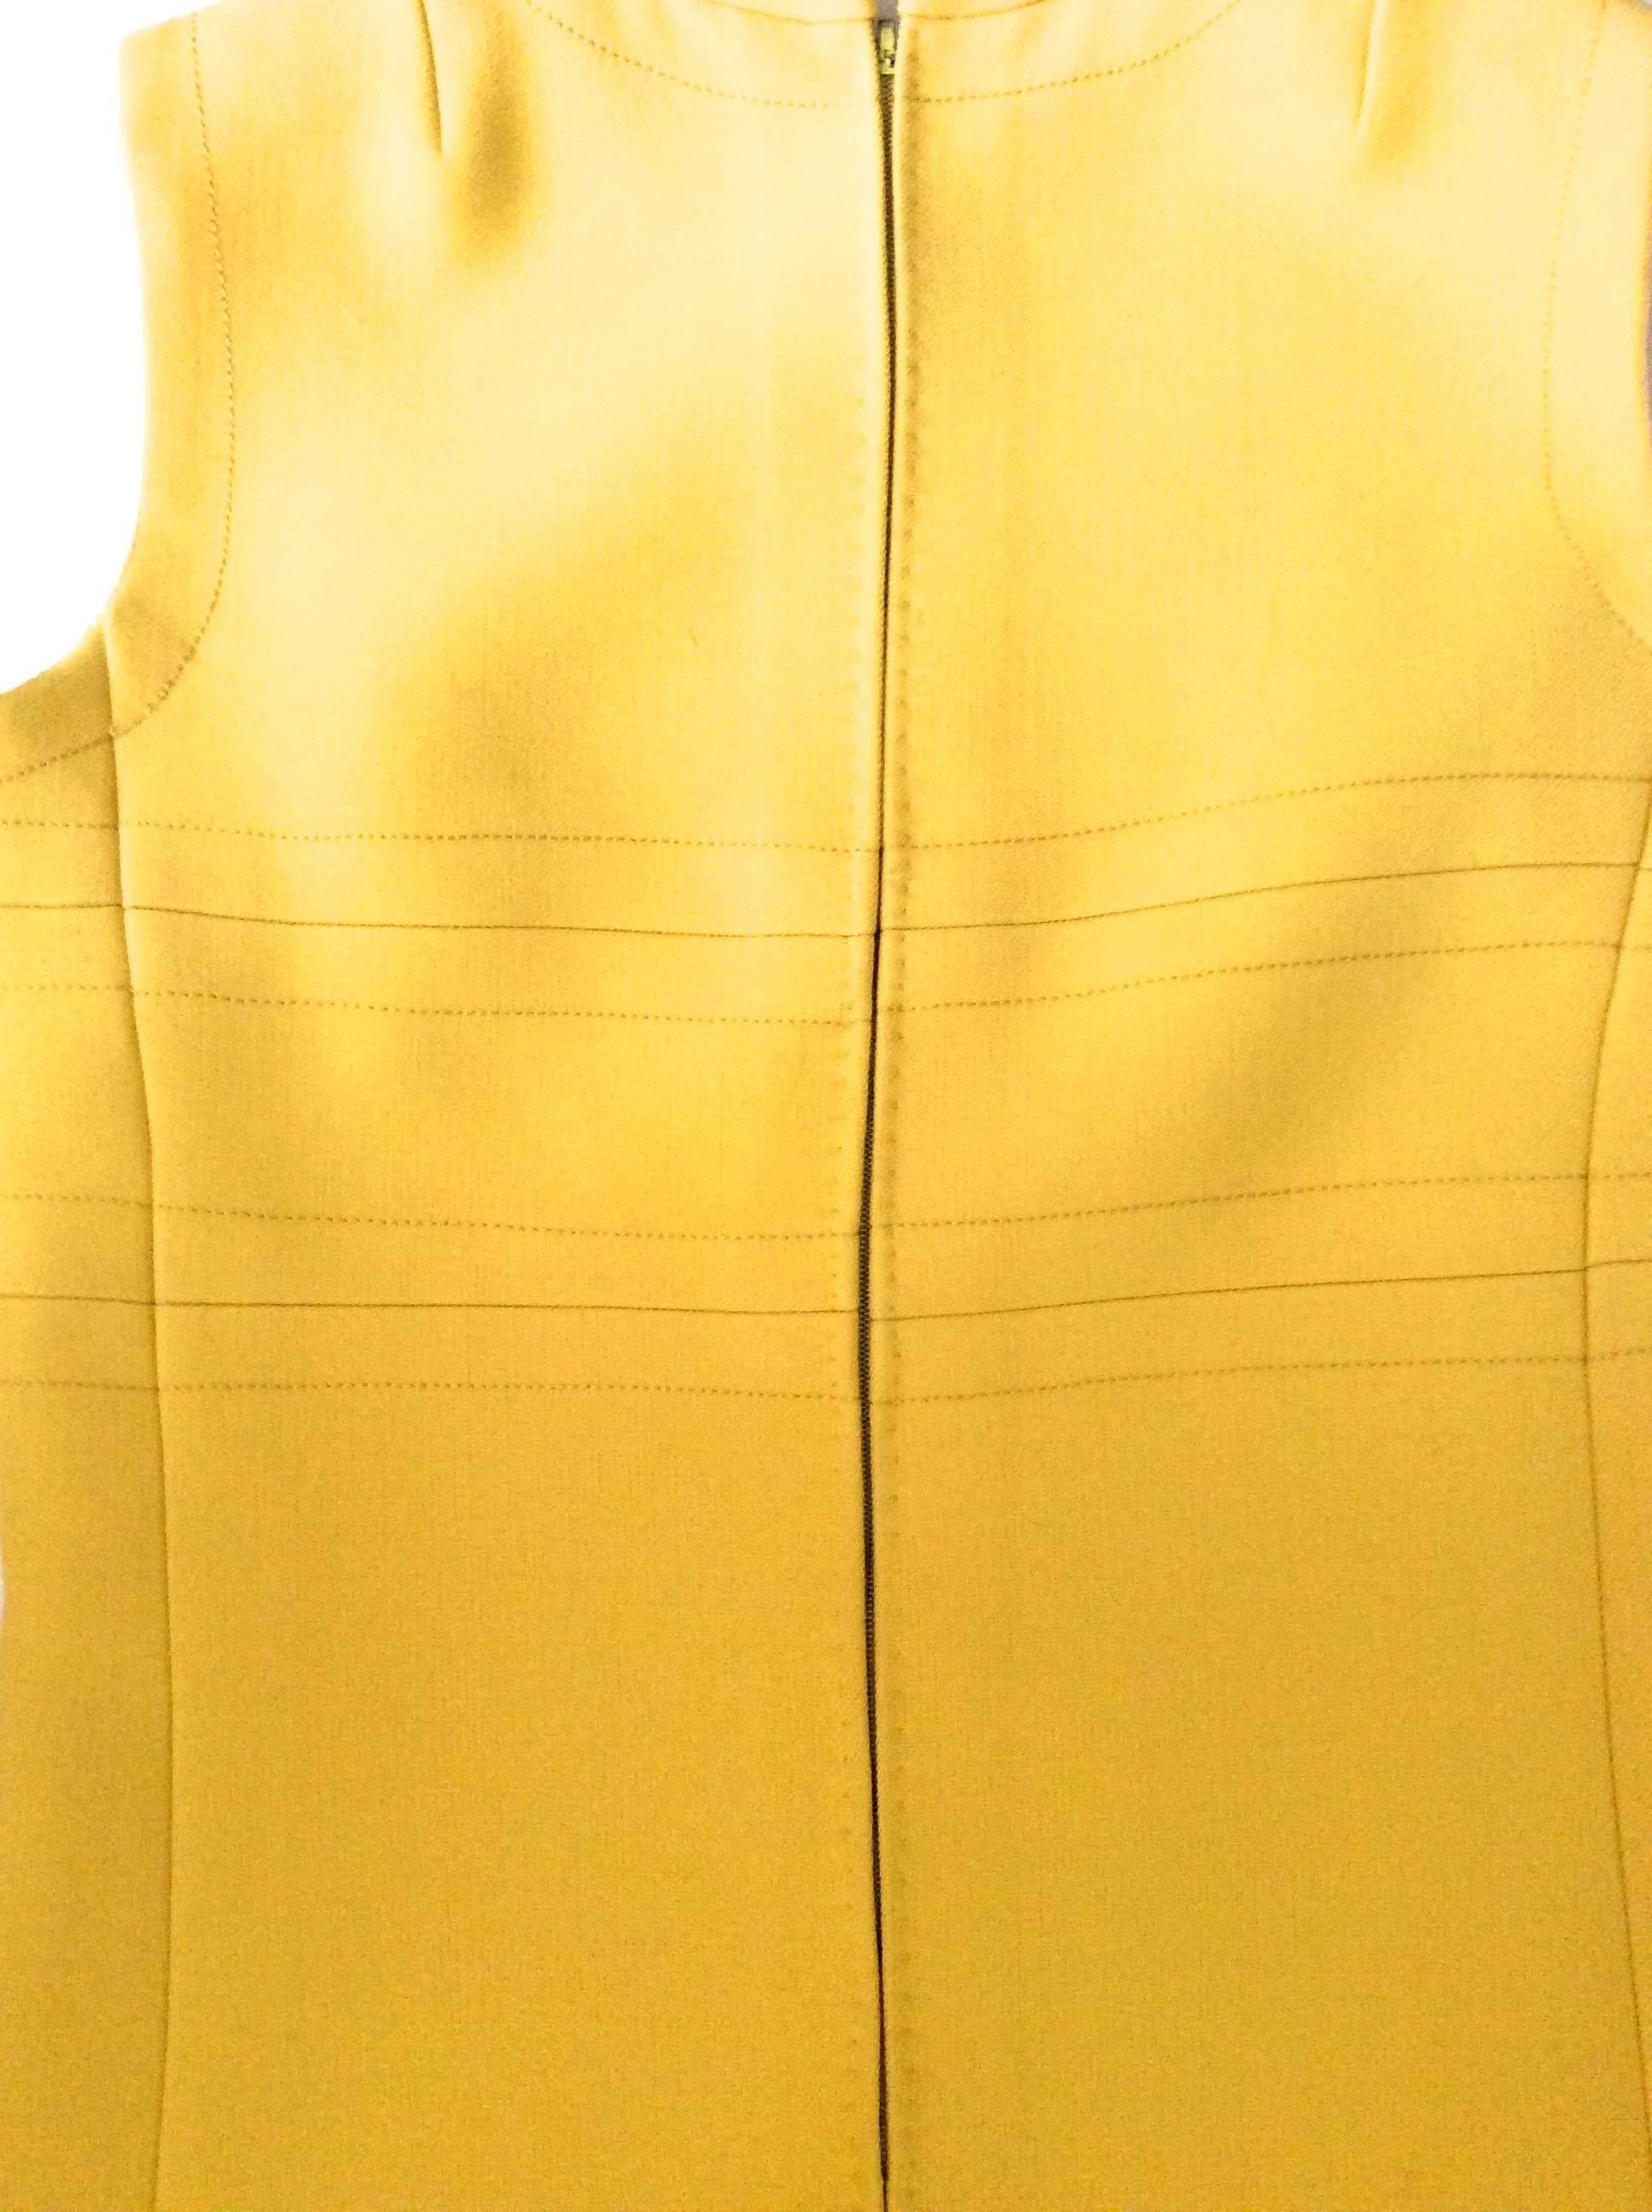 Vintage 1960's Yellow Sleeveless A-Line Dress 3